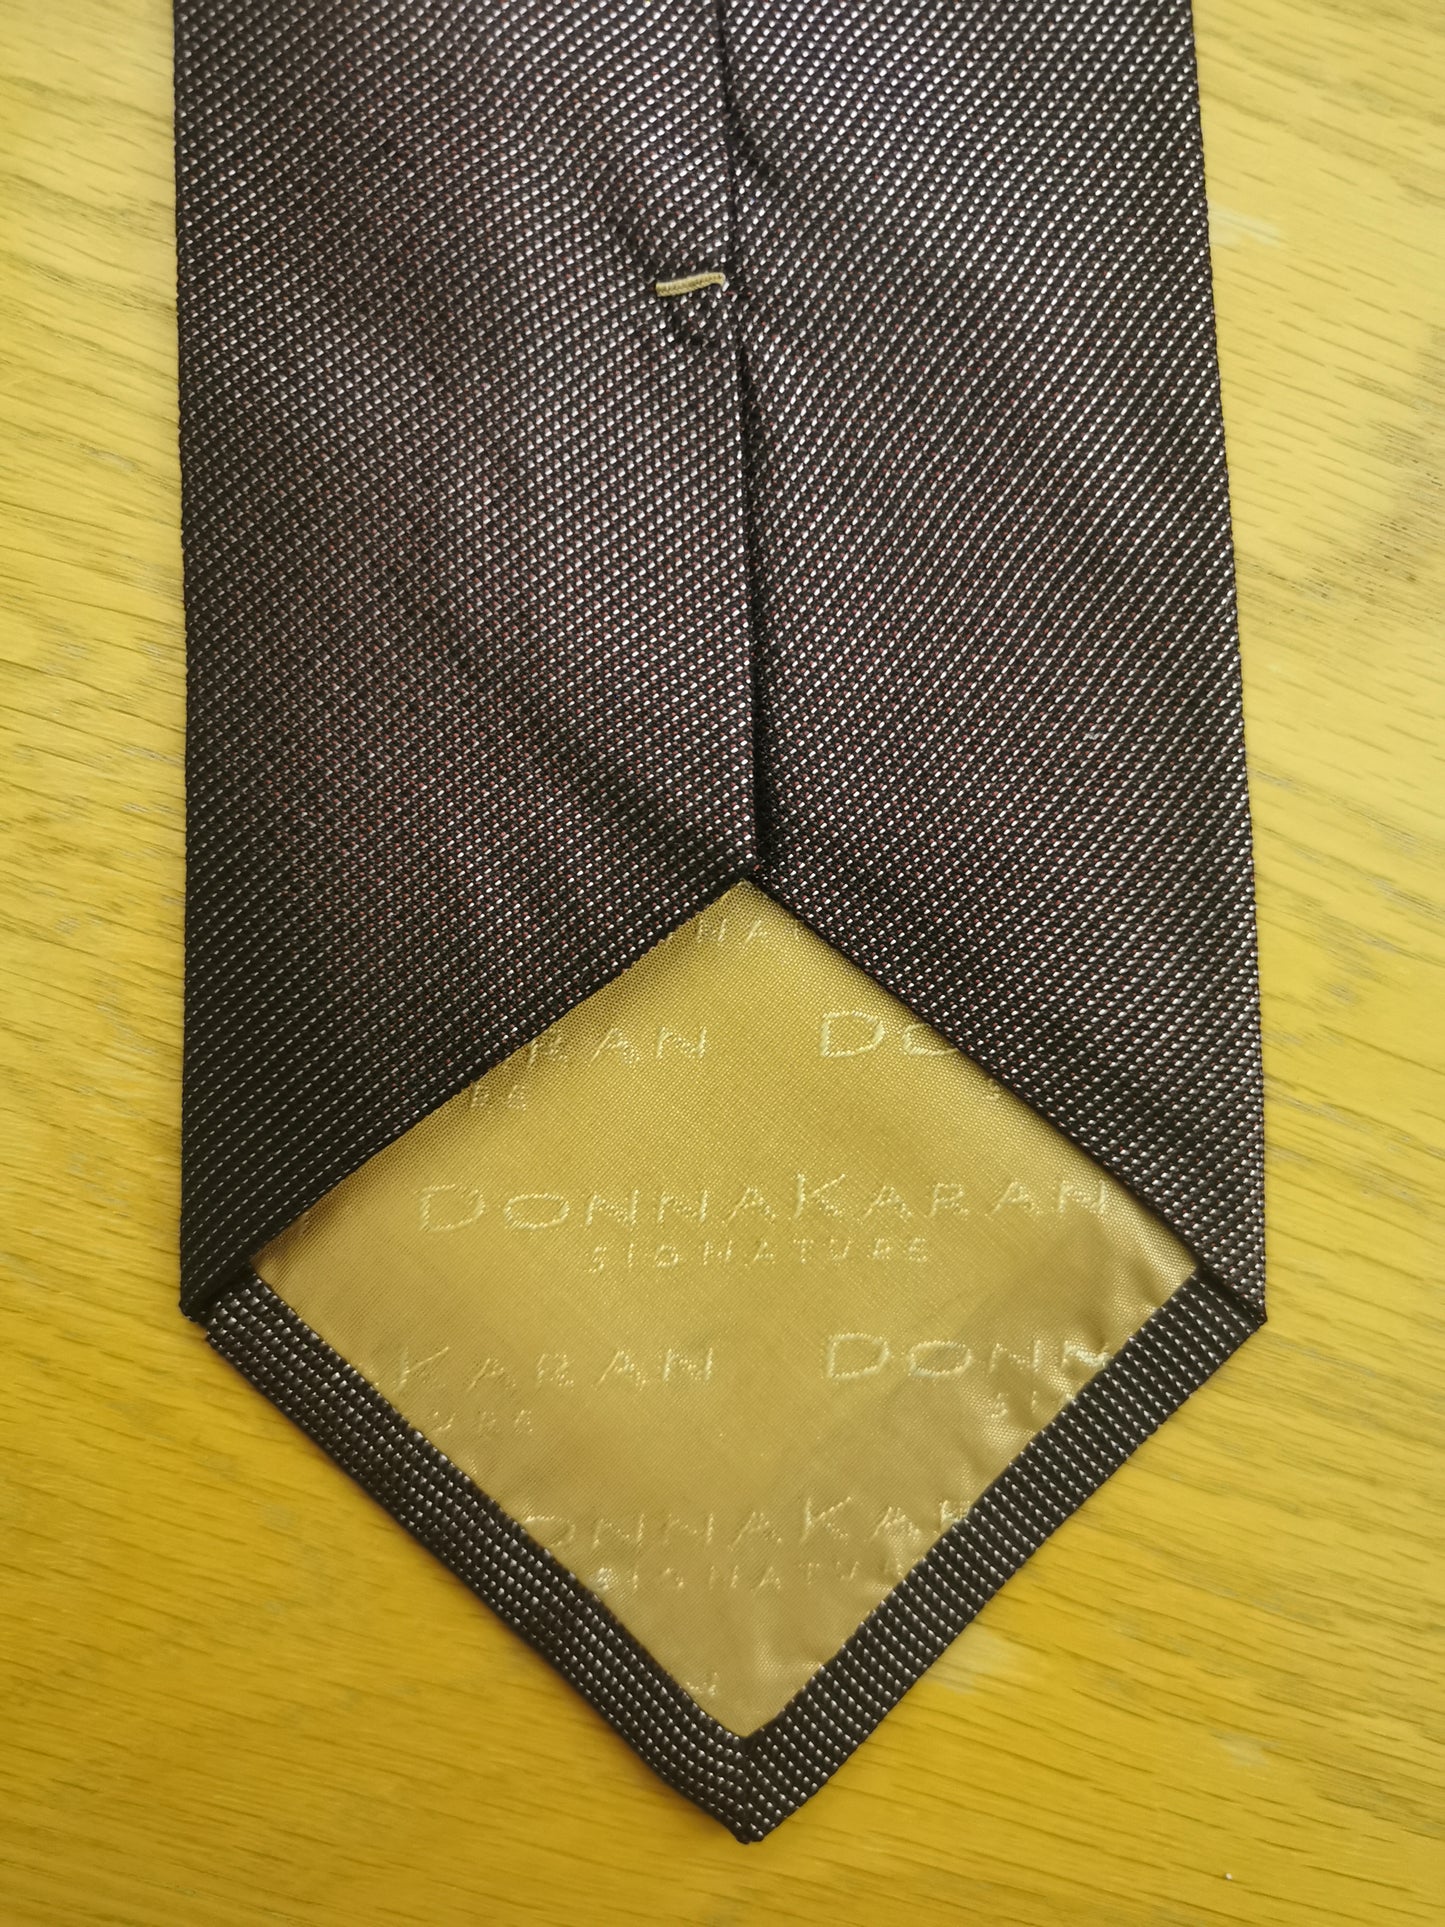 93% silk Donna Karan Signature tie